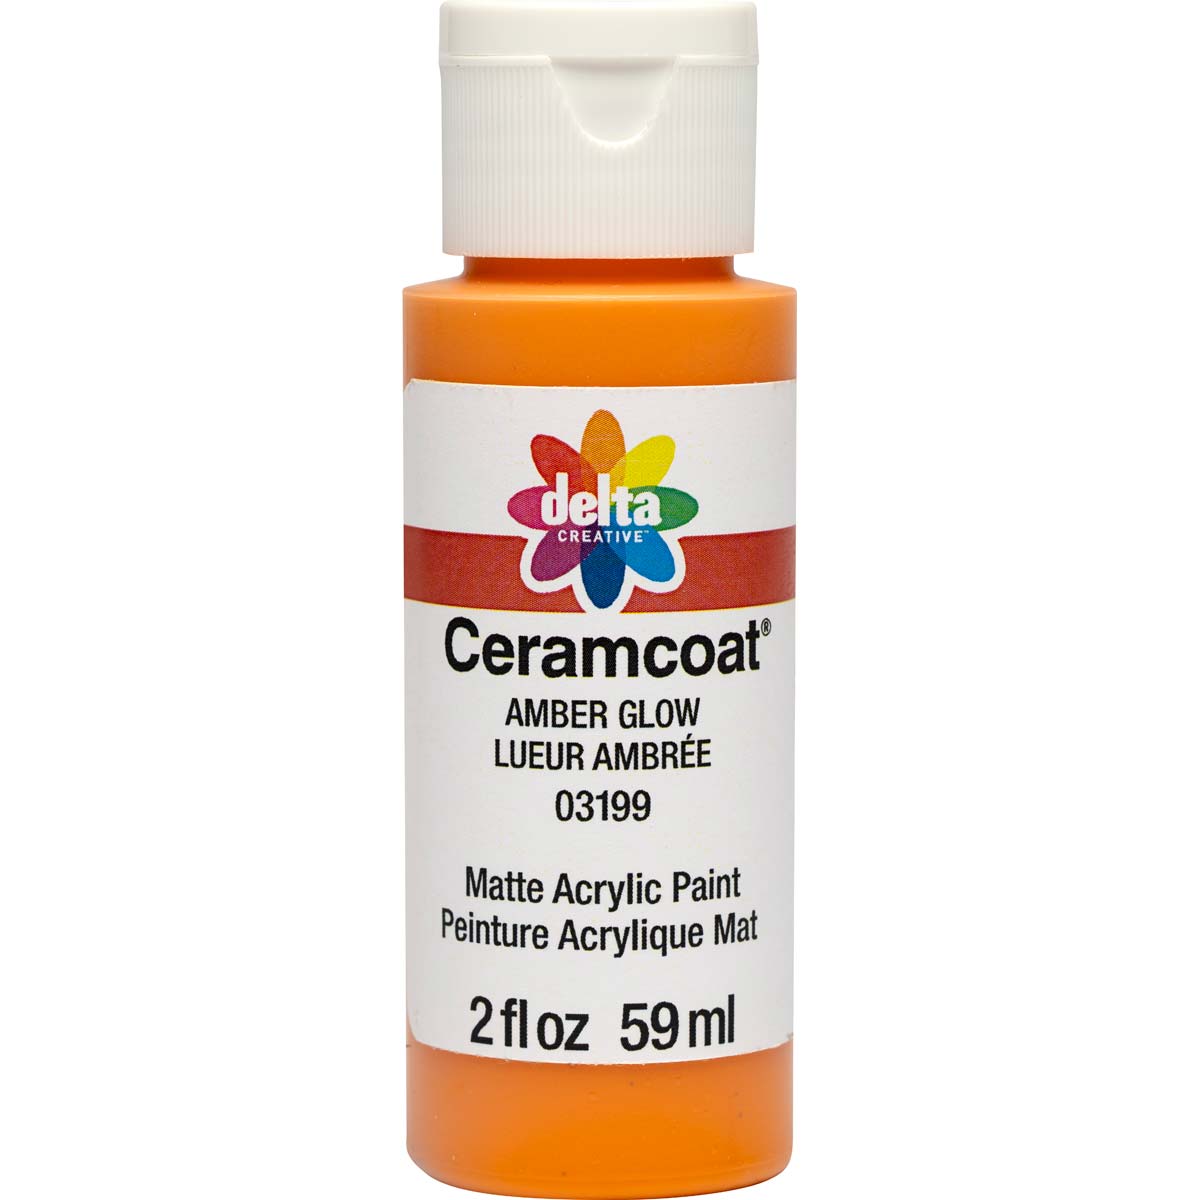 Delta Ceramcoat Acrylic Paint - Amber Glow, 2 oz. - 03199